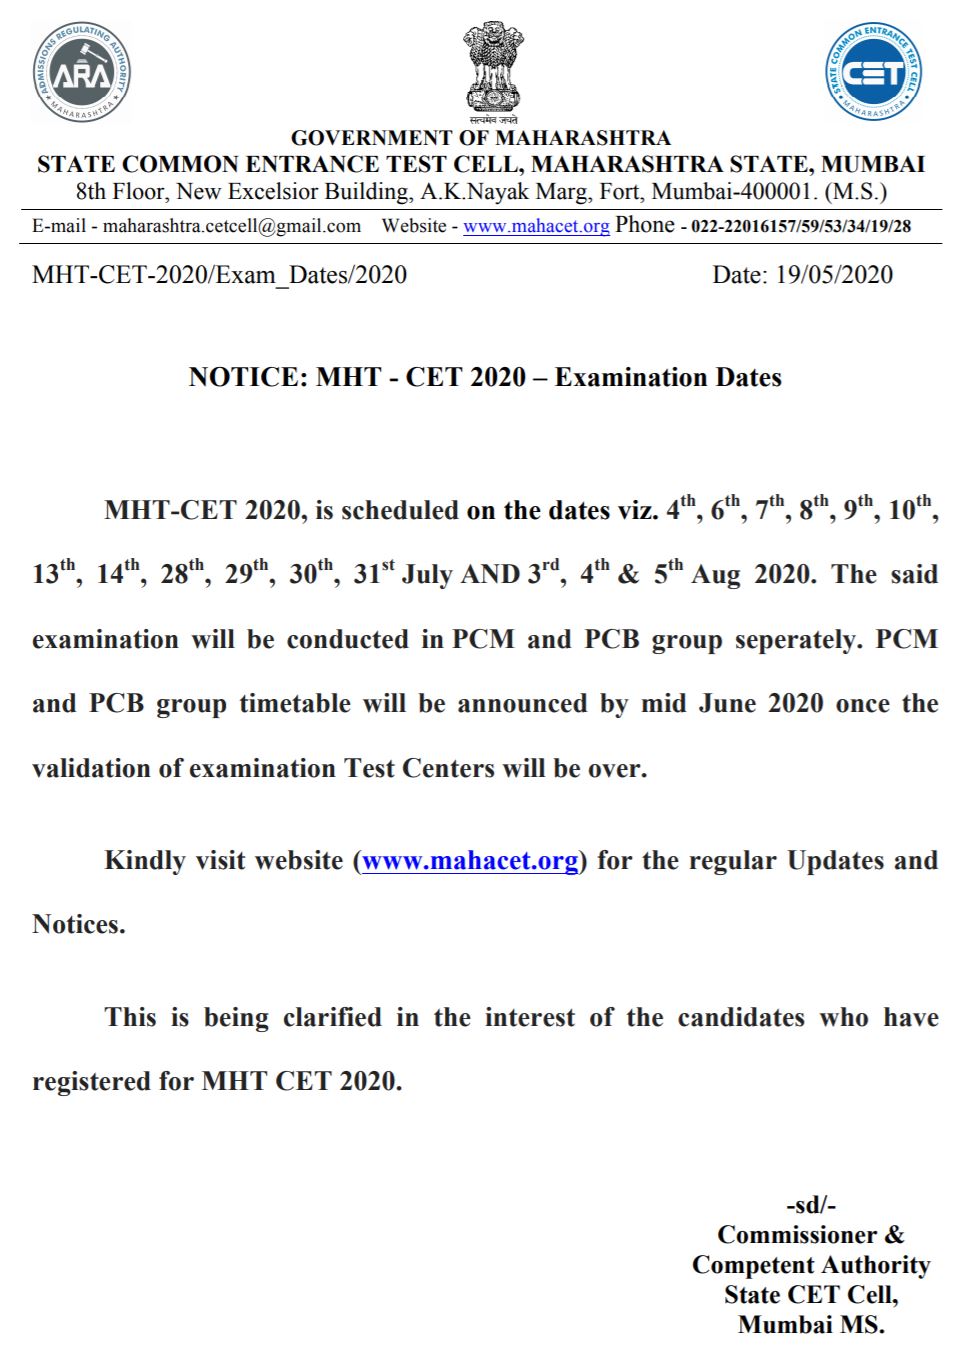 MHTCET 2020 New Exam Dates 